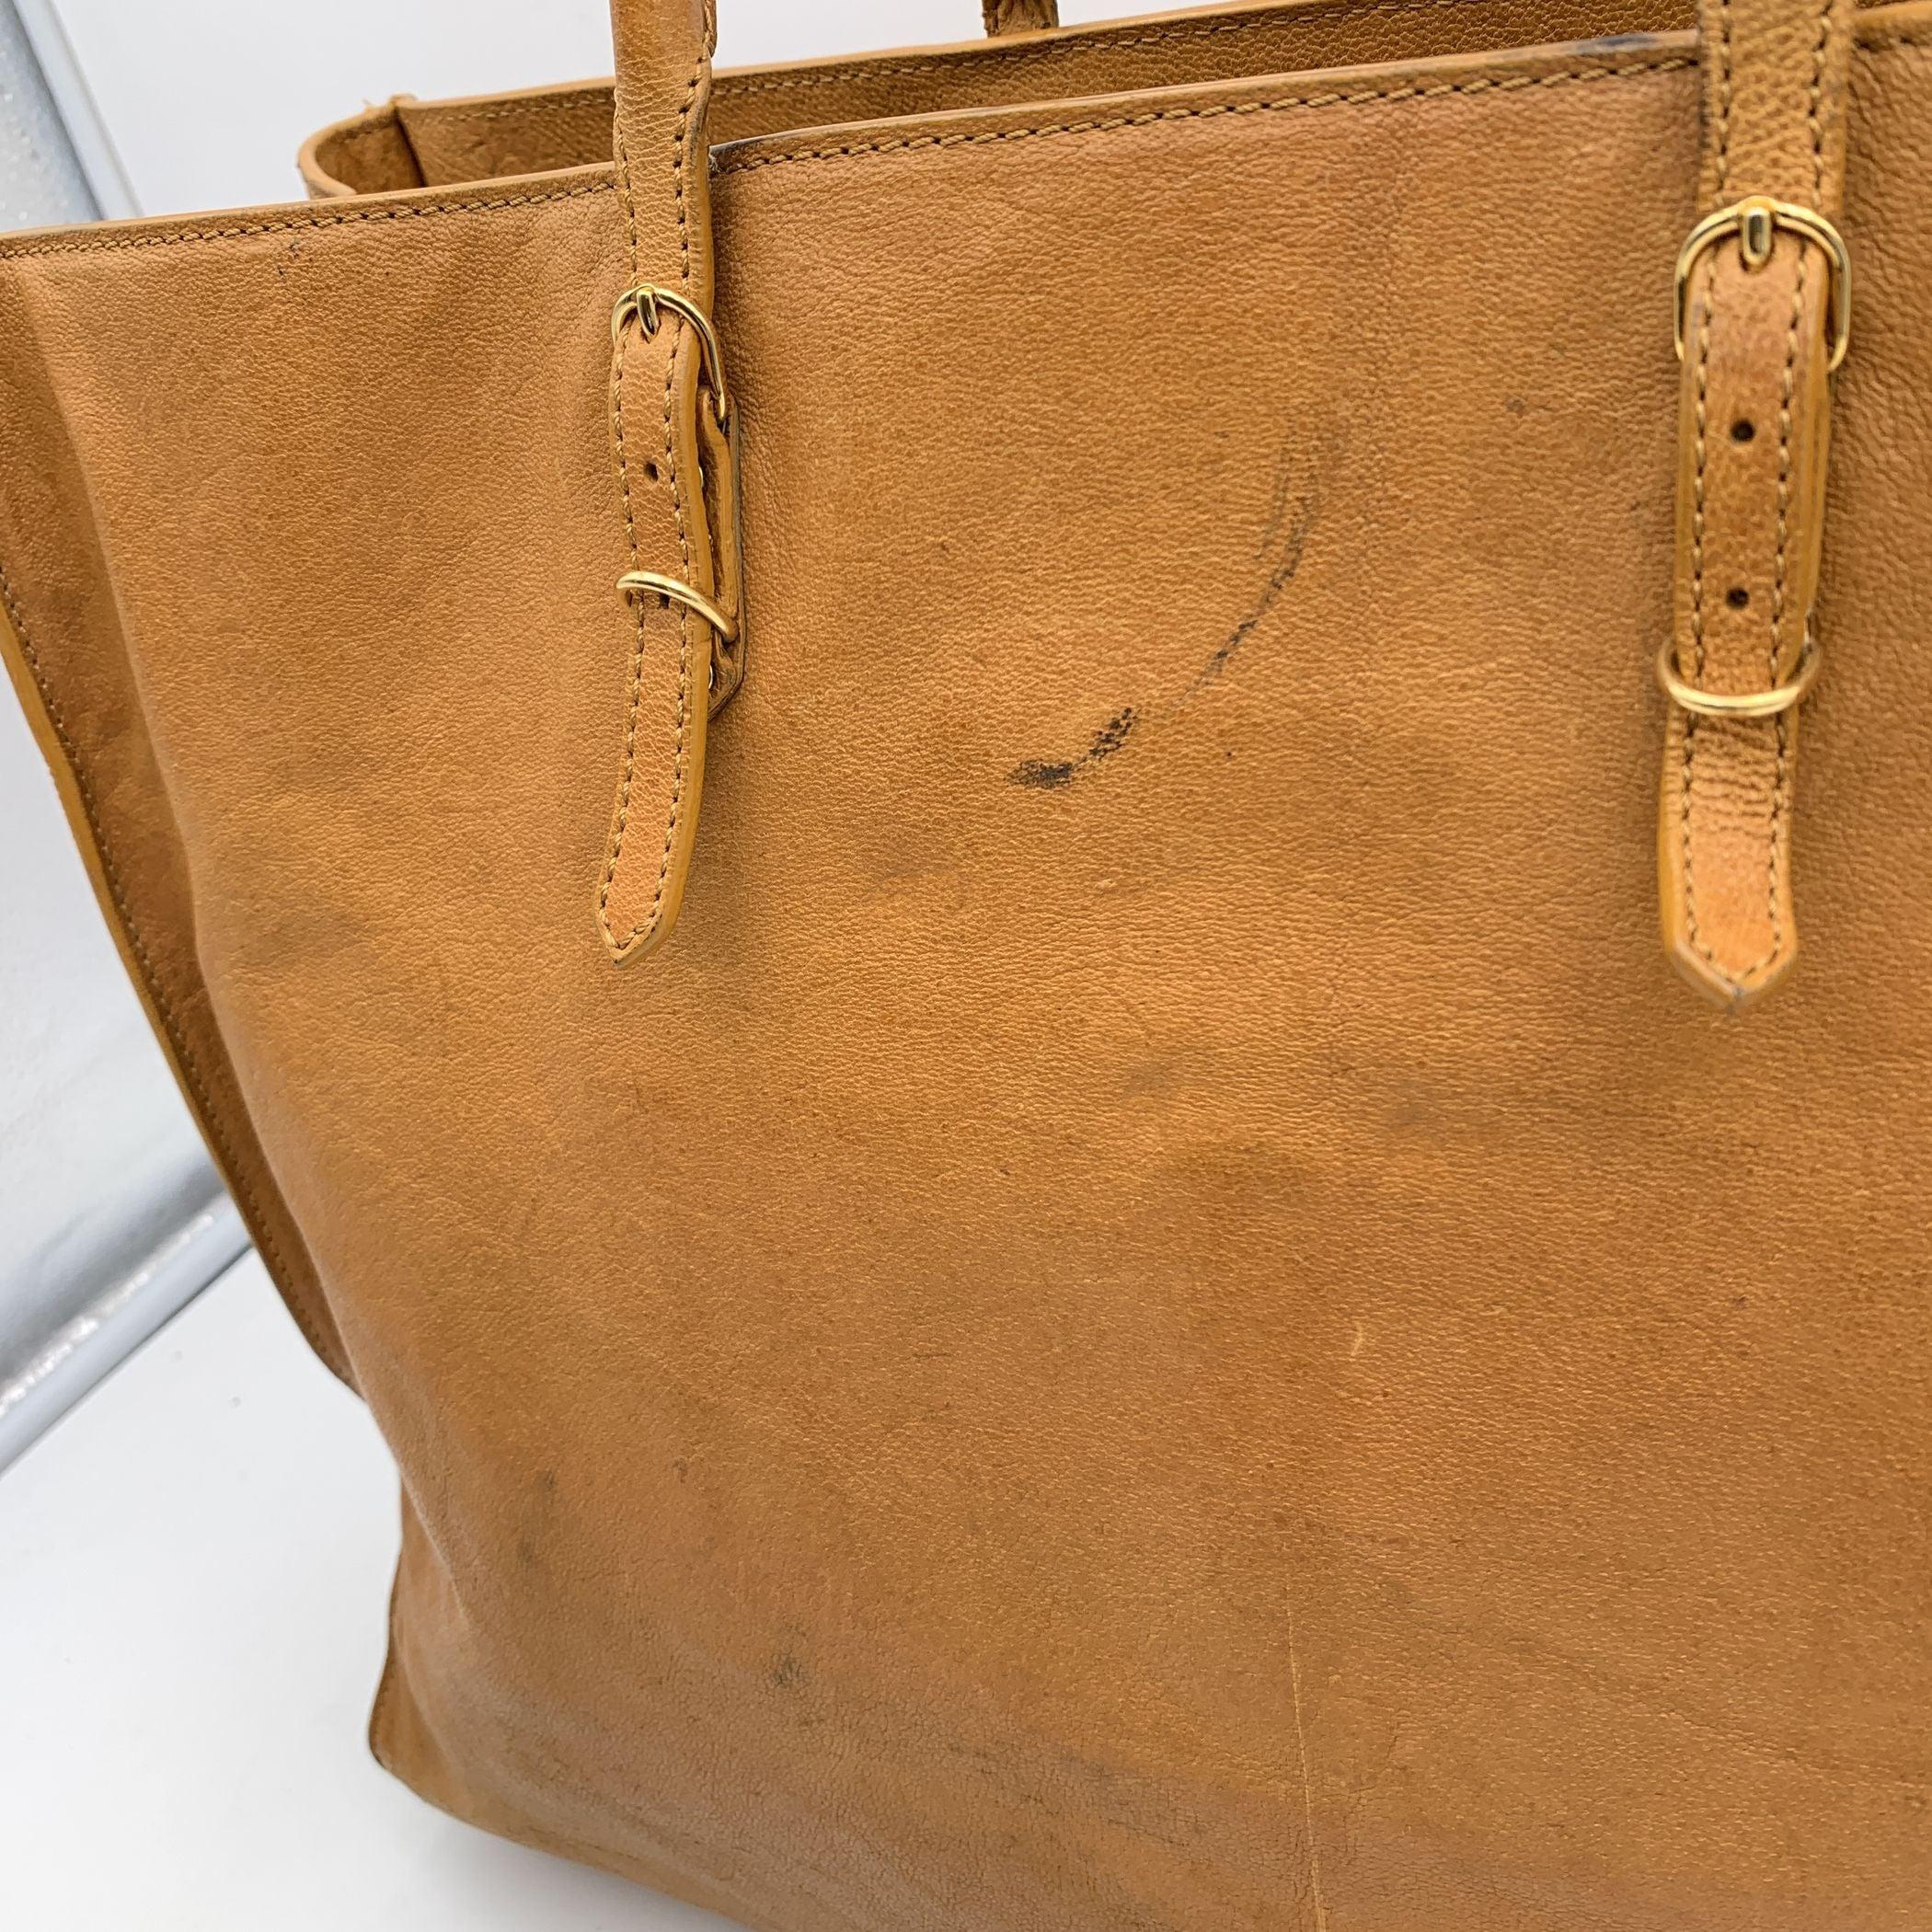 Balenciaga Beige Leather Papier A4 Large Tote Bag Handbag For Sale 1